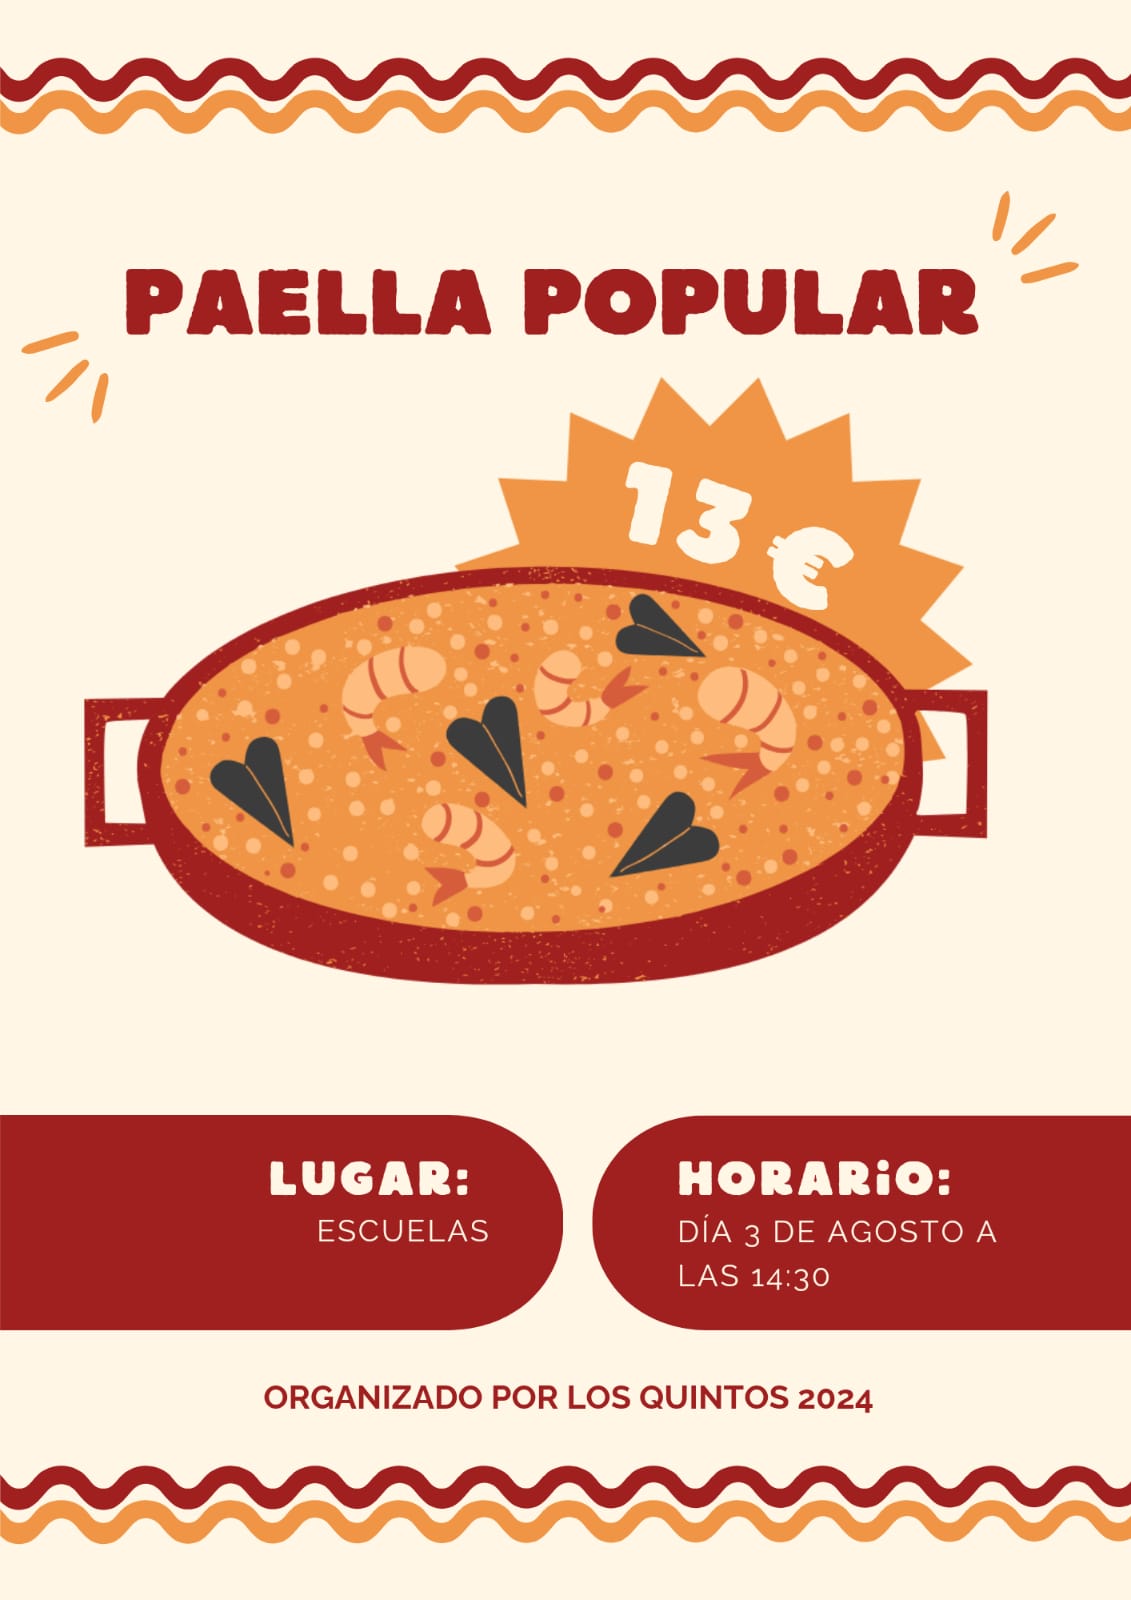 Paella Popular. 3/8/24